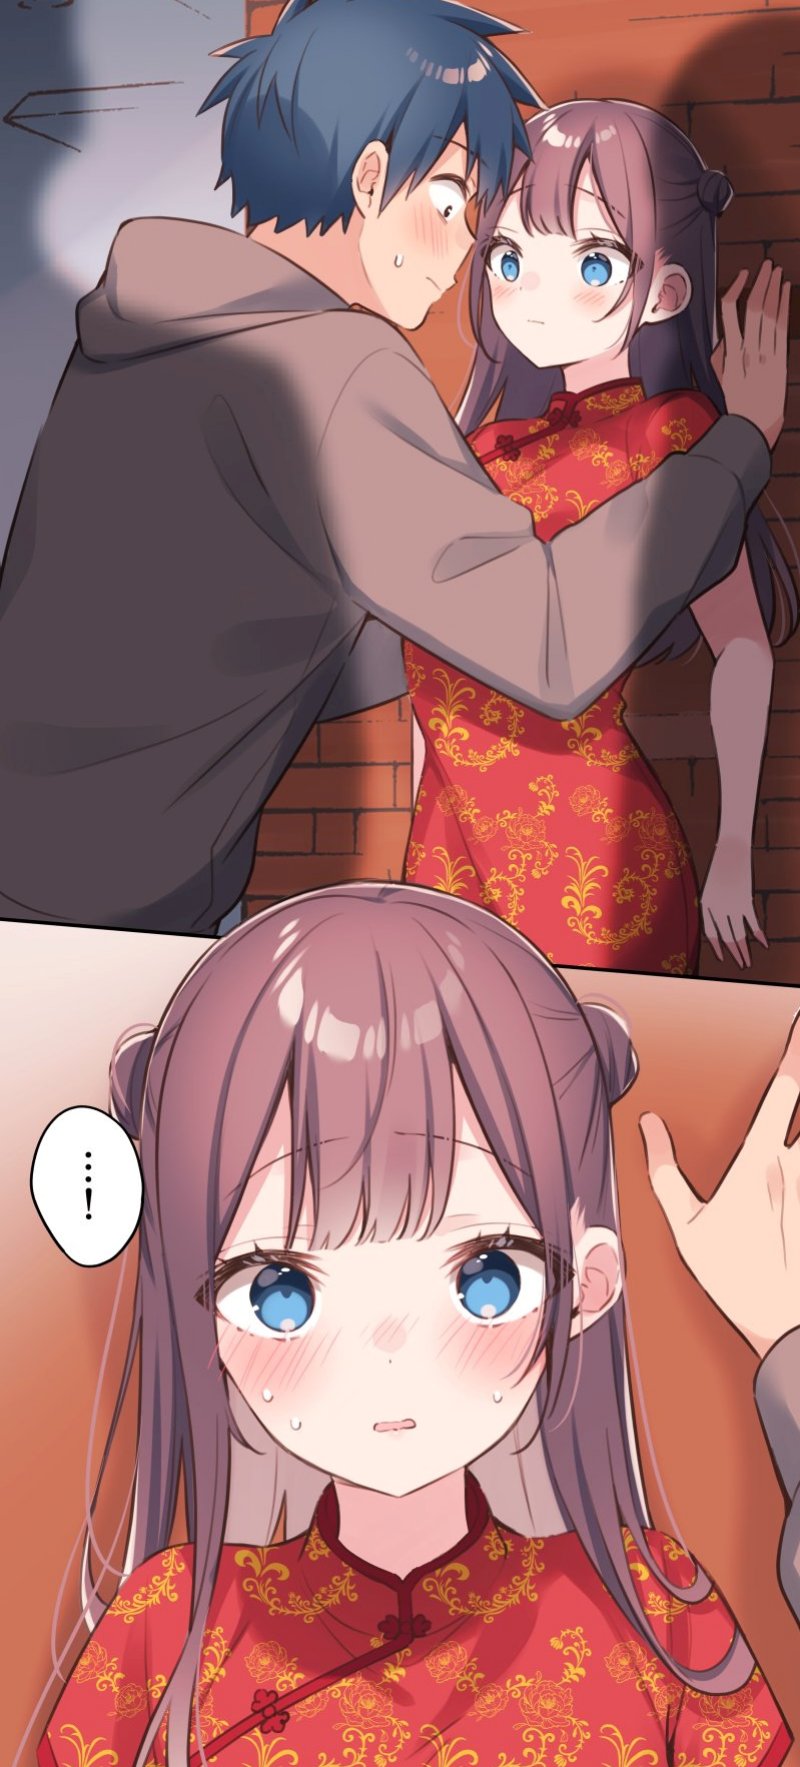 Waka-chan Is Flirty Again Chapter 80